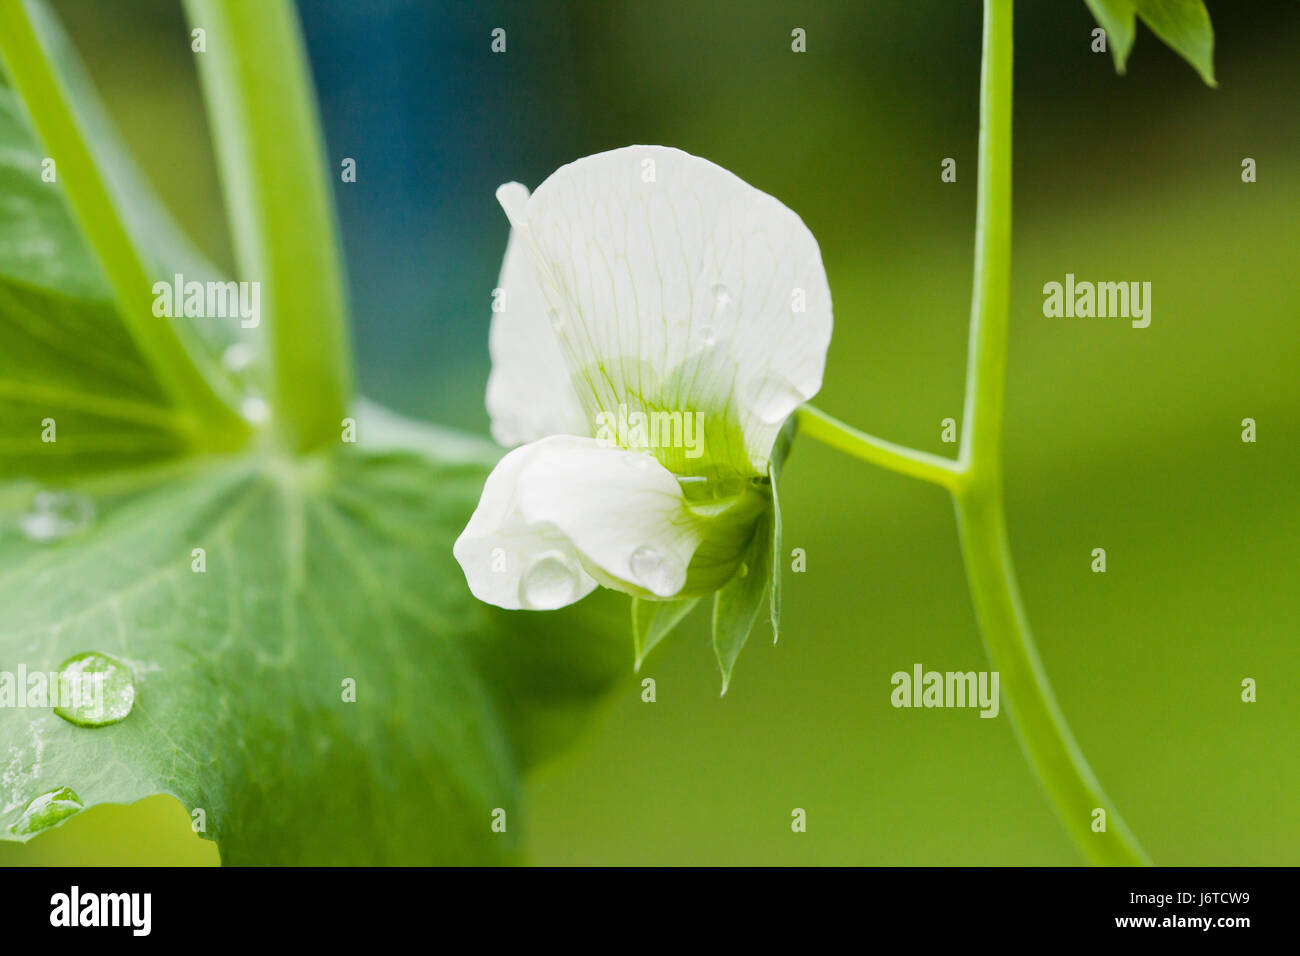 Snow pea flower (Pisum sativum var. saccharatum) Stock Photo